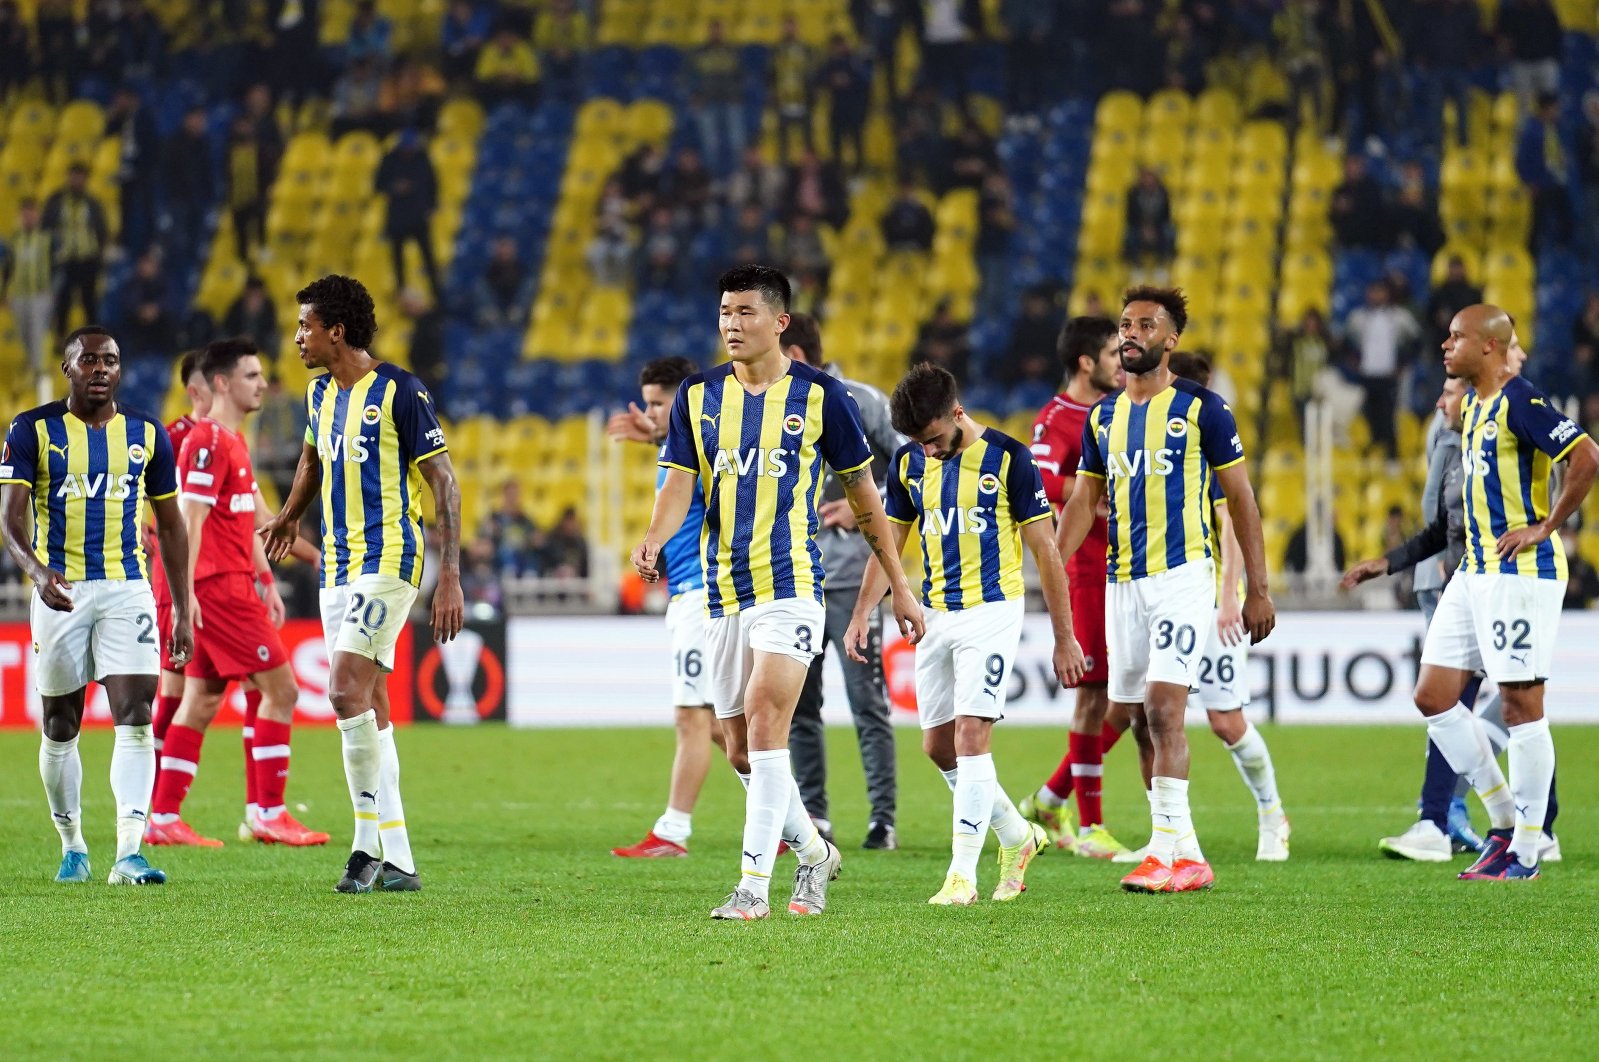 Fenerbahçe players are seen during the UEFA Europa League match against Belgium's Royal Antwerp at Istanbul Şükrü Saraçoğlu Stadium on Oct. 22, 2021, Istanbul, Turkey. (IHA Photo)